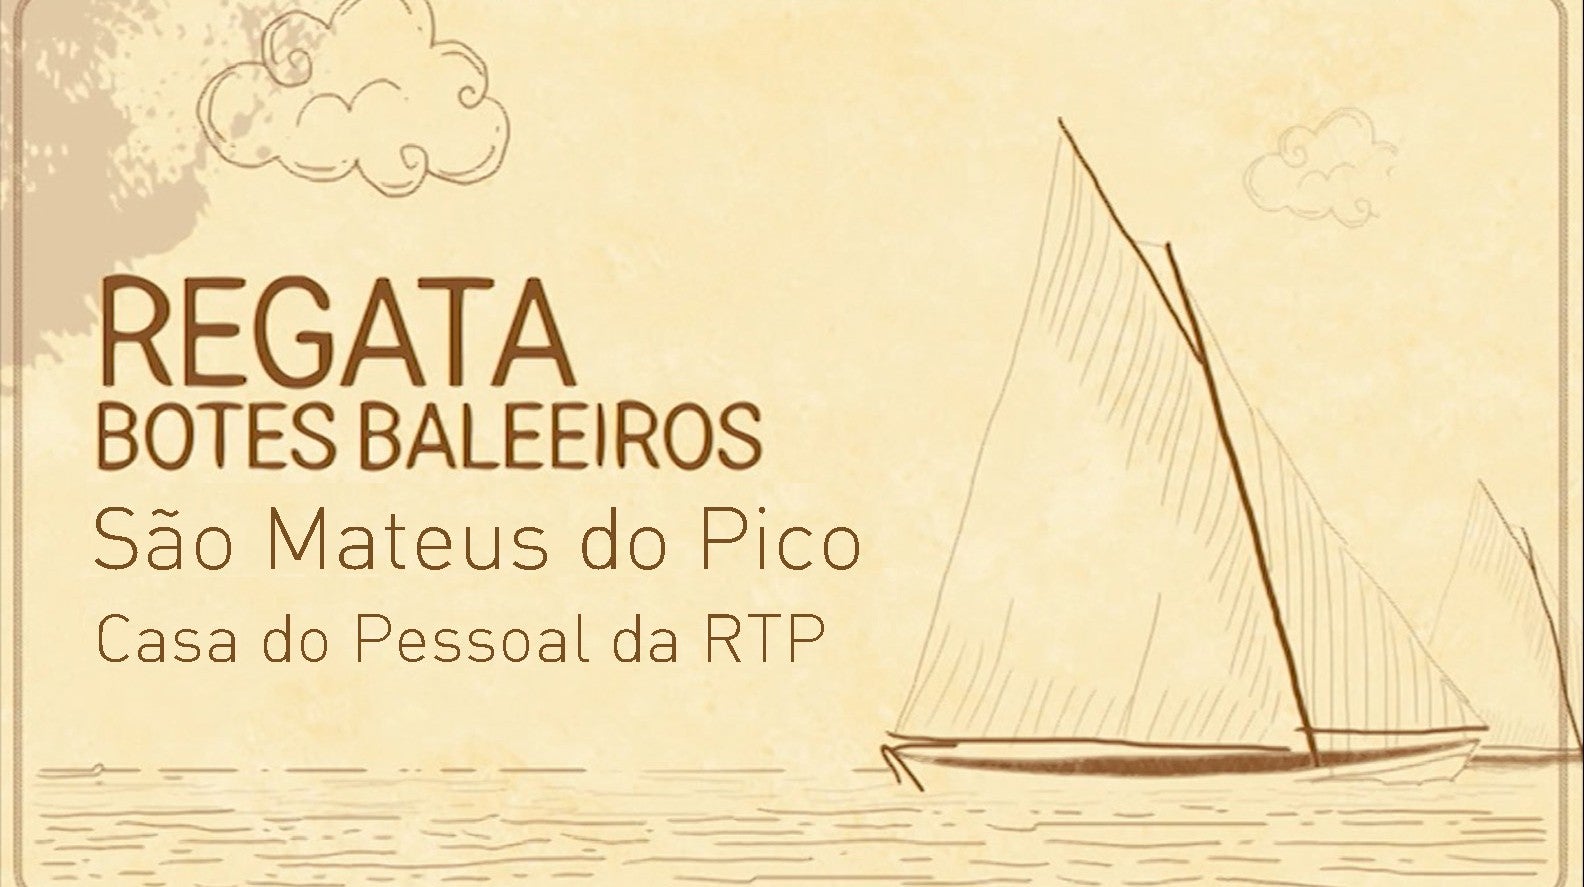 1 Regata de Botes Baleeiros So Mateus do Pico / Casa do Pessoal da RTP